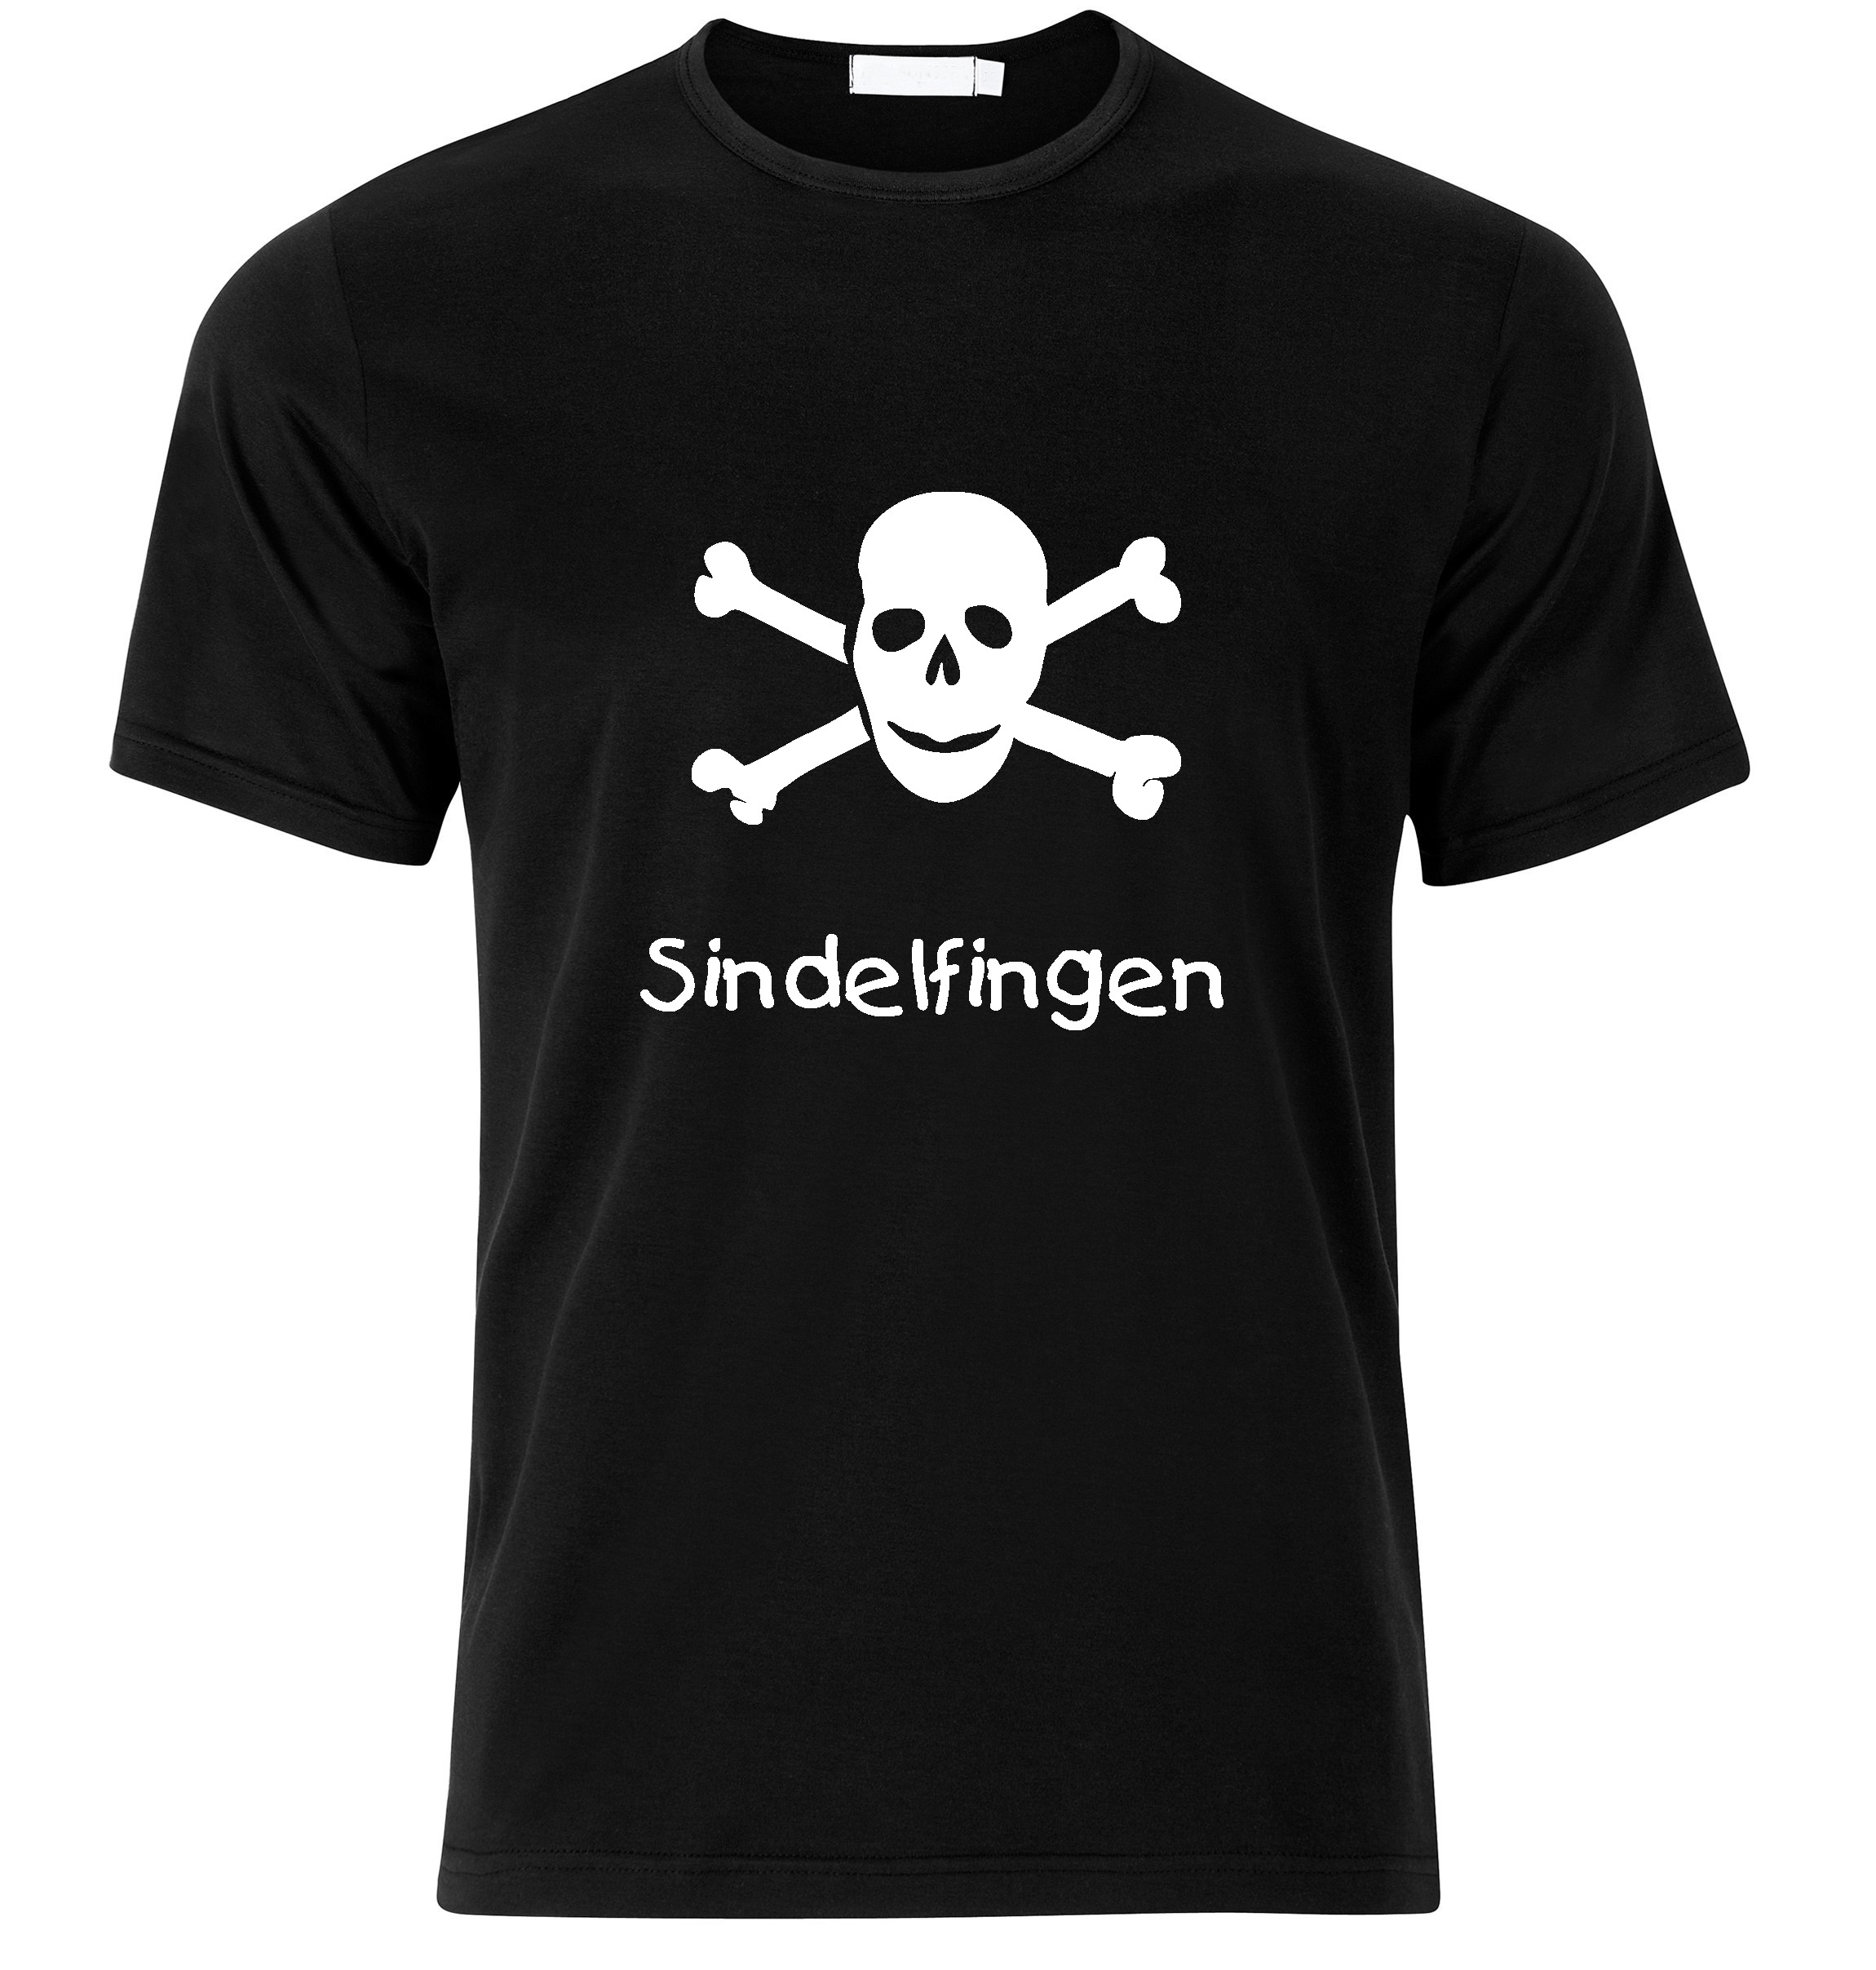 T-Shirt Sindelfingen Jolly Roger, Totenkopf